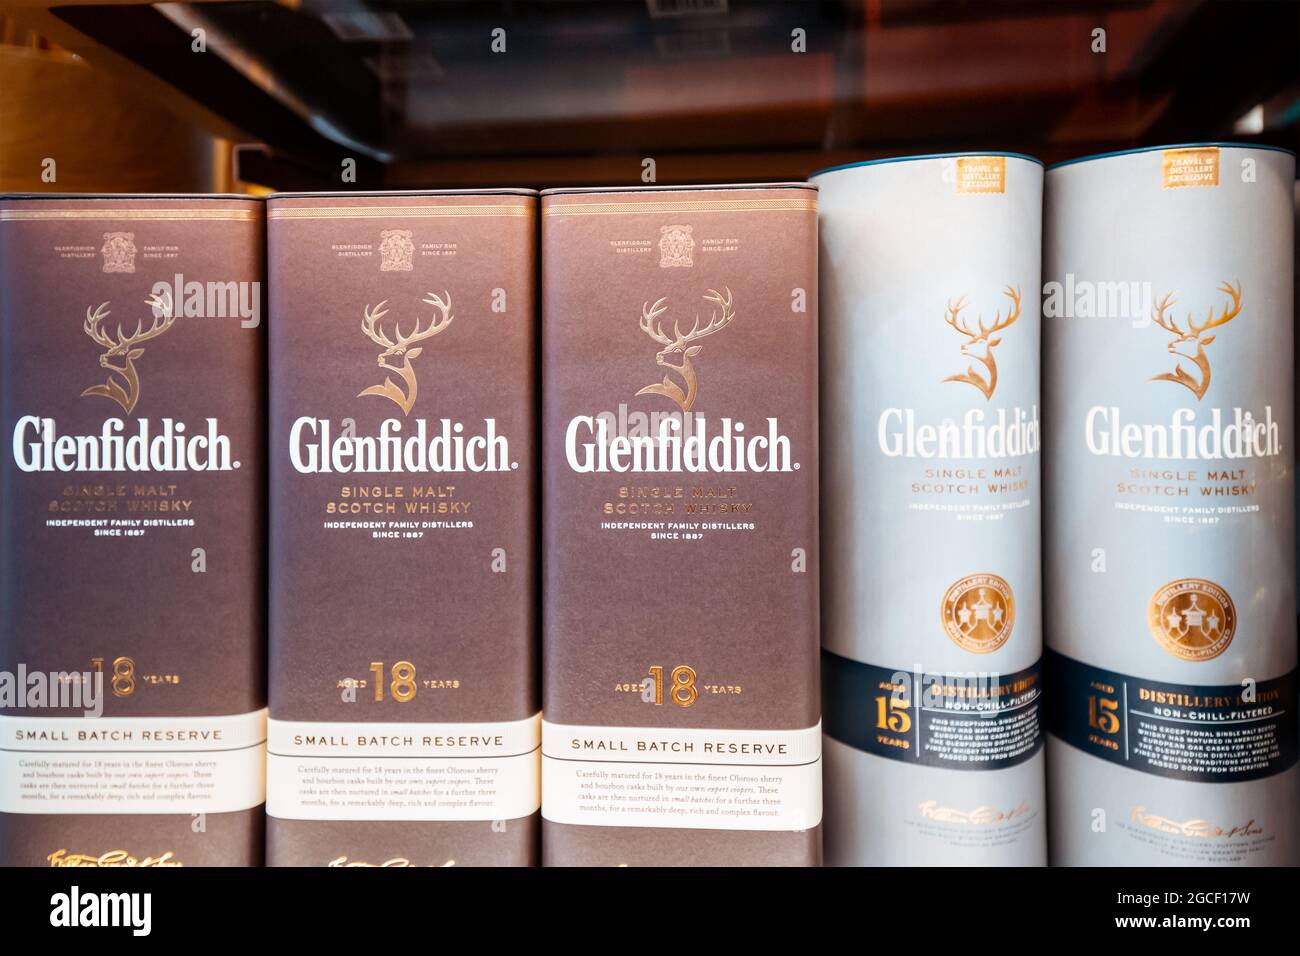 26 February 2021, Dubai, UAE: Glenfiddich the famous Scotch whisky is sold in Dubai duty free Stock Photo